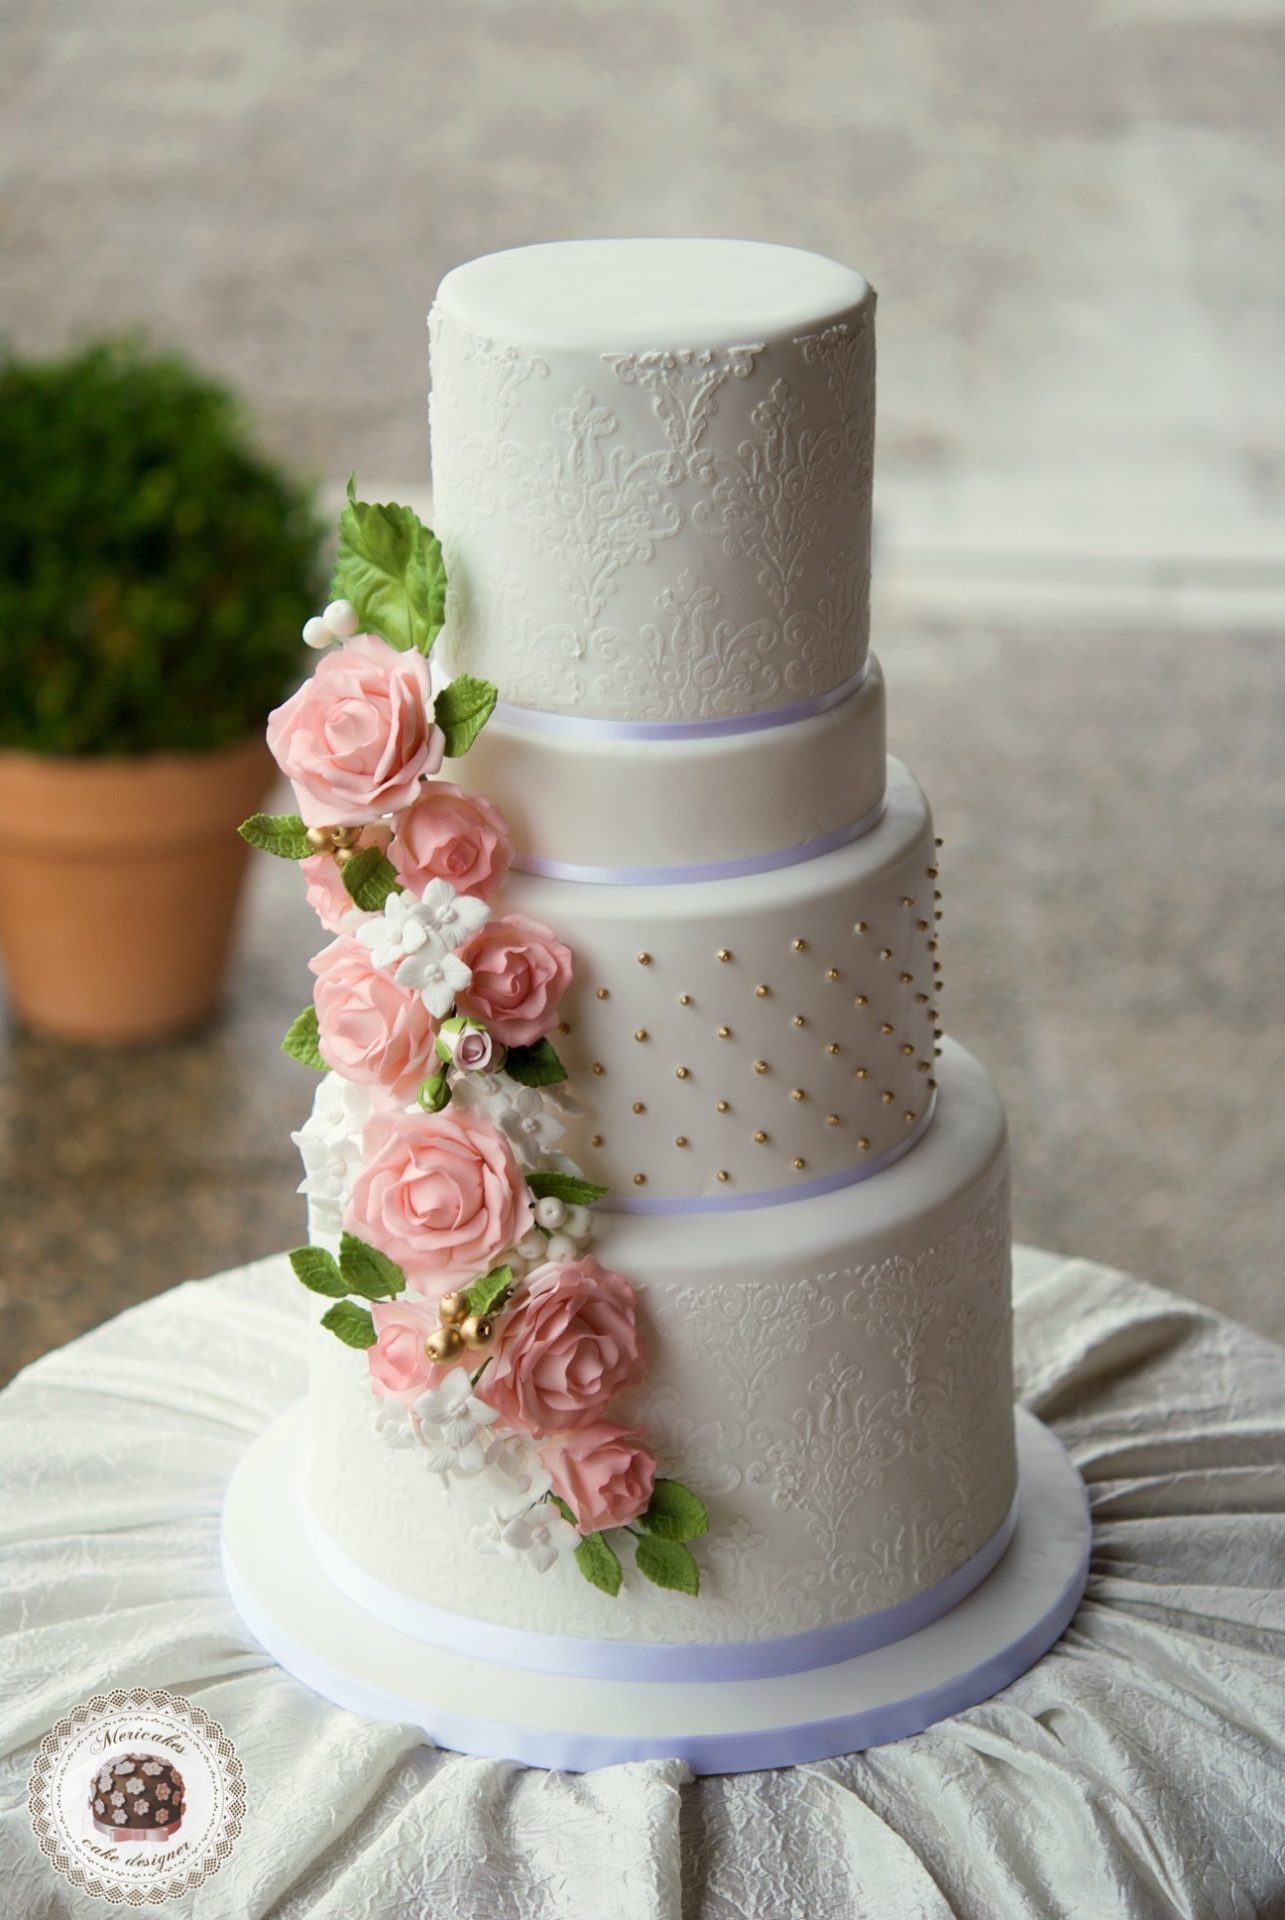 WEDDING CAKE, tarta de boda, cake artist, damask, sugar flowers, flores de aucar, hortensias, rosas, lemon curd, fondant, barcelona, mericakes